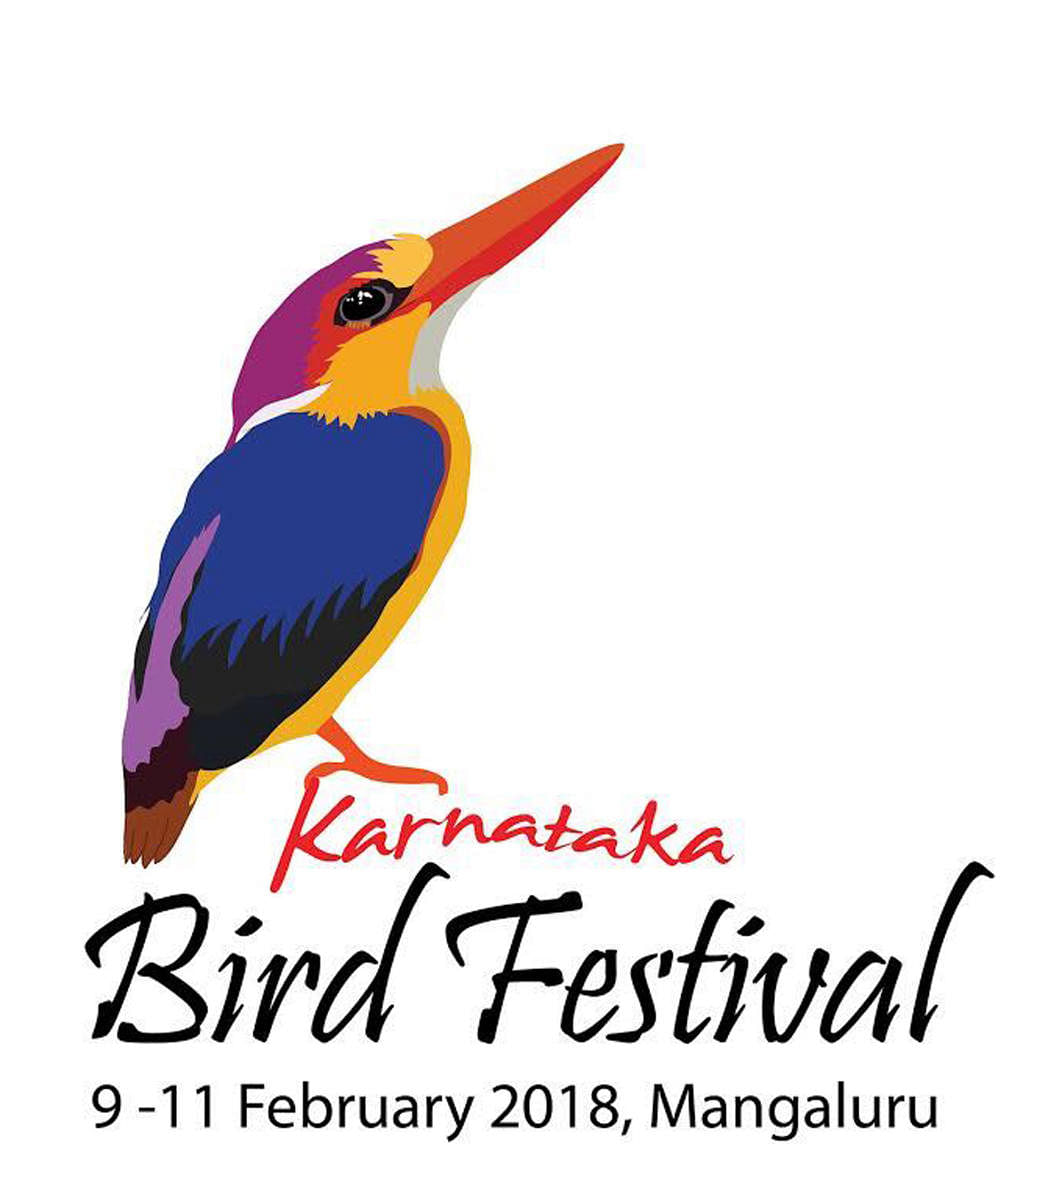 For DH Bosky Khanna story, Bird Festival at Mangaluru.